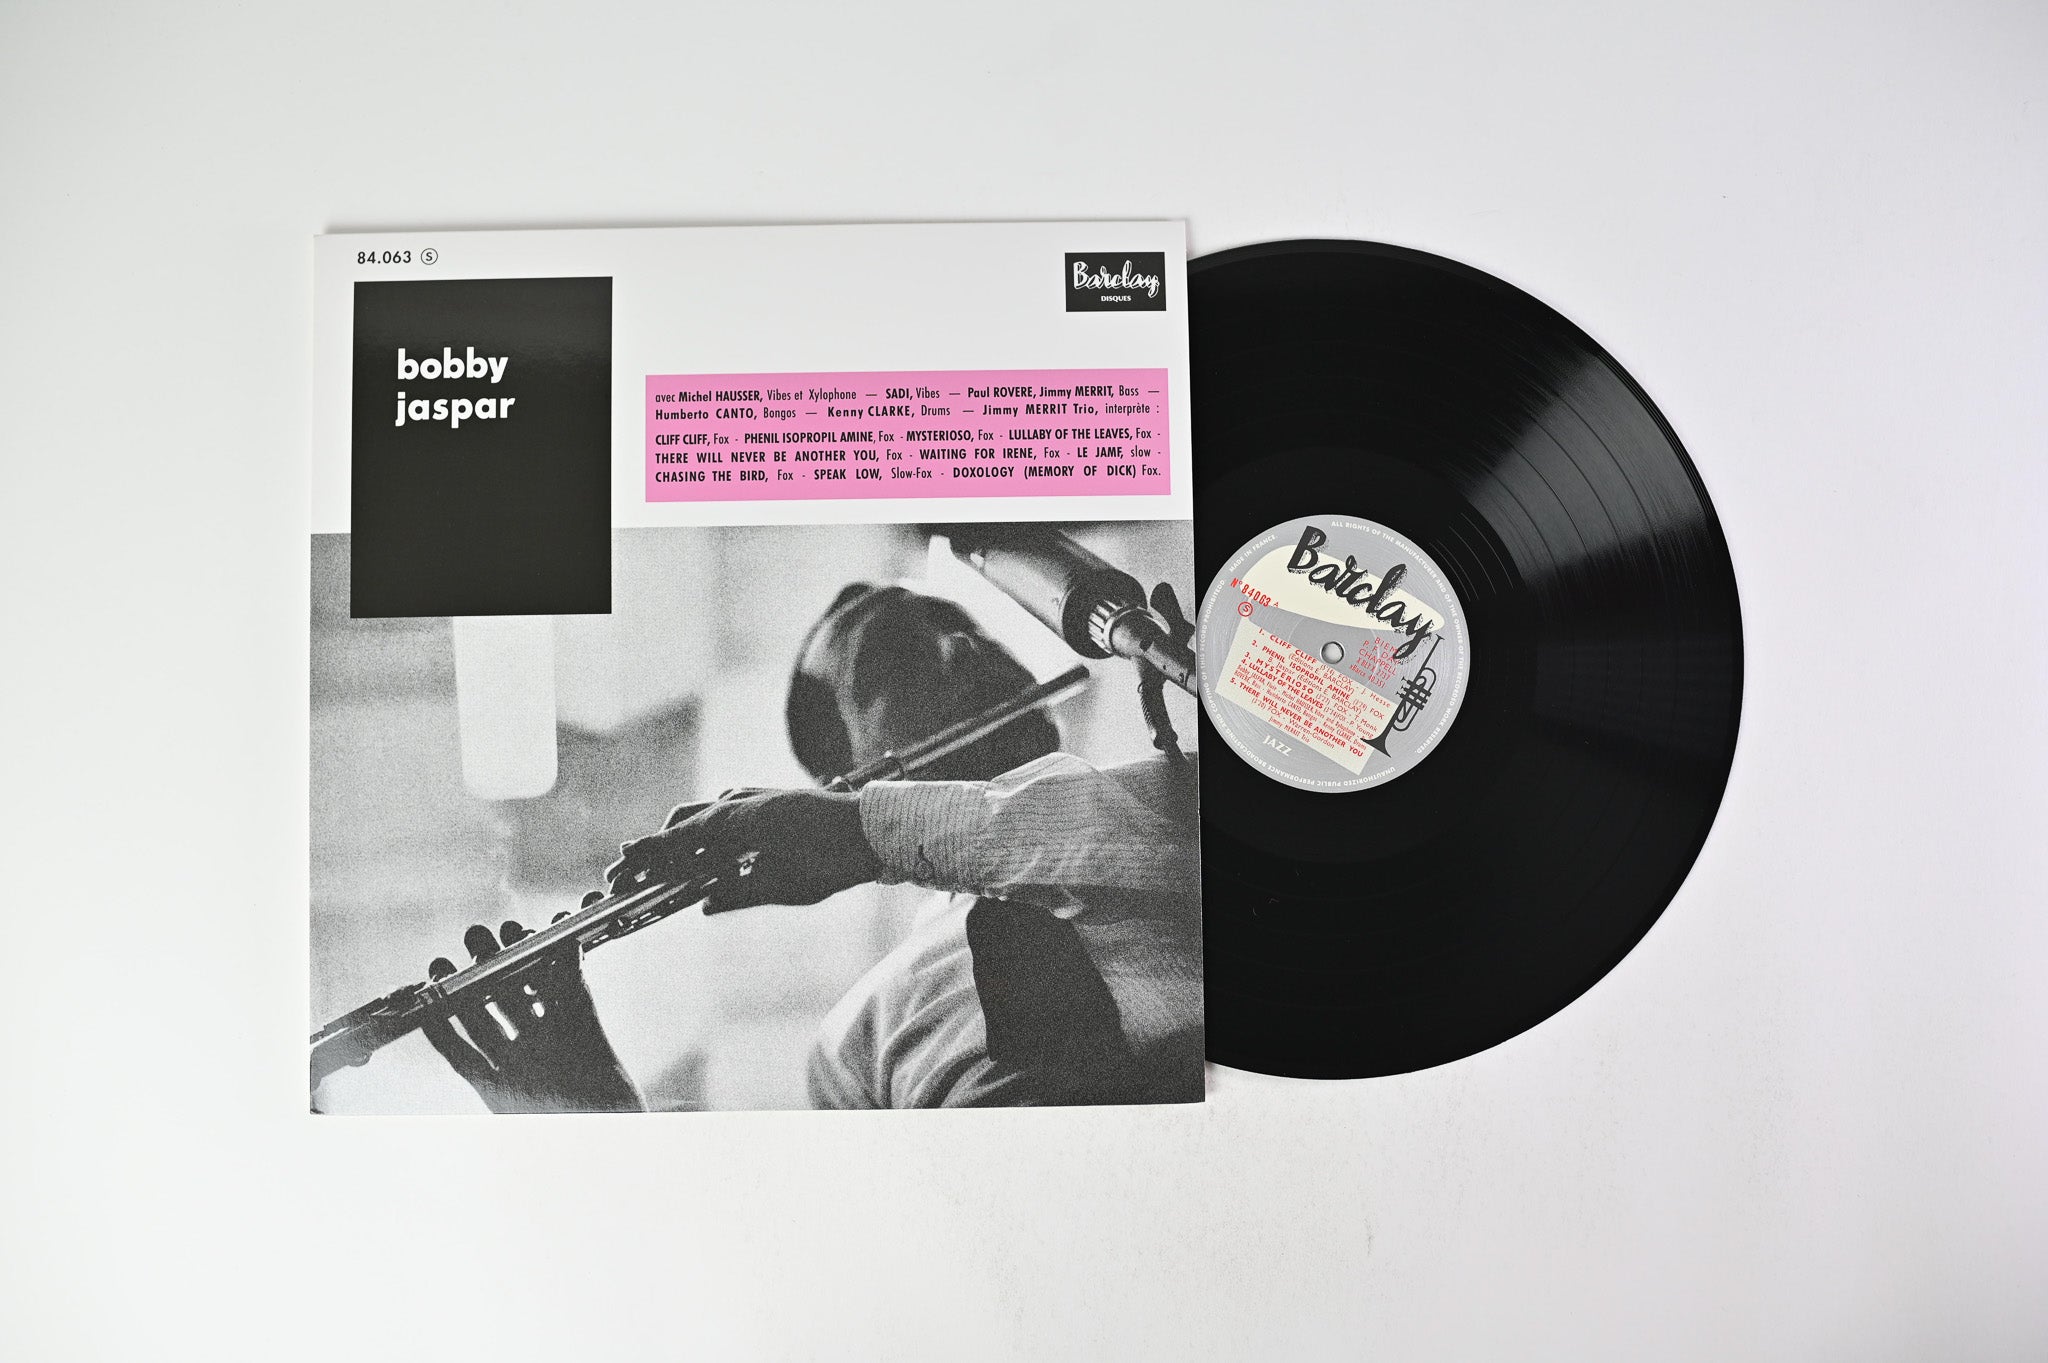 Bobby Jaspar - Bobby Jaspar Reissue on Sam Records/Barclay